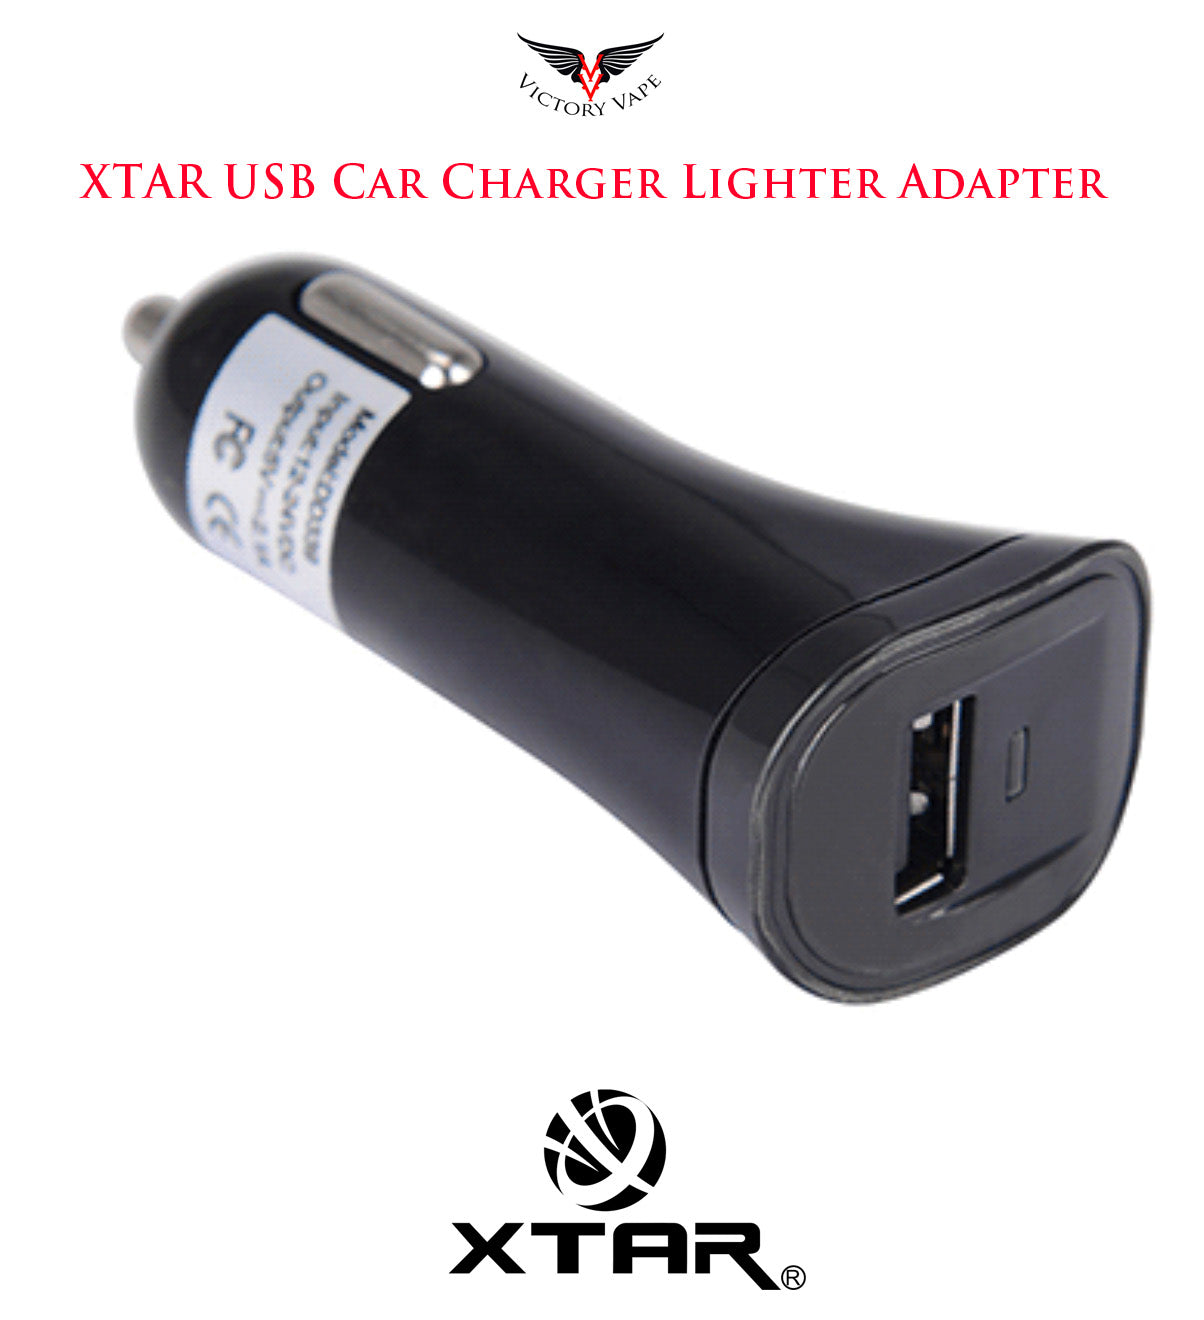  XTAR USB Car Charger Adapter (fits lighter slot) 